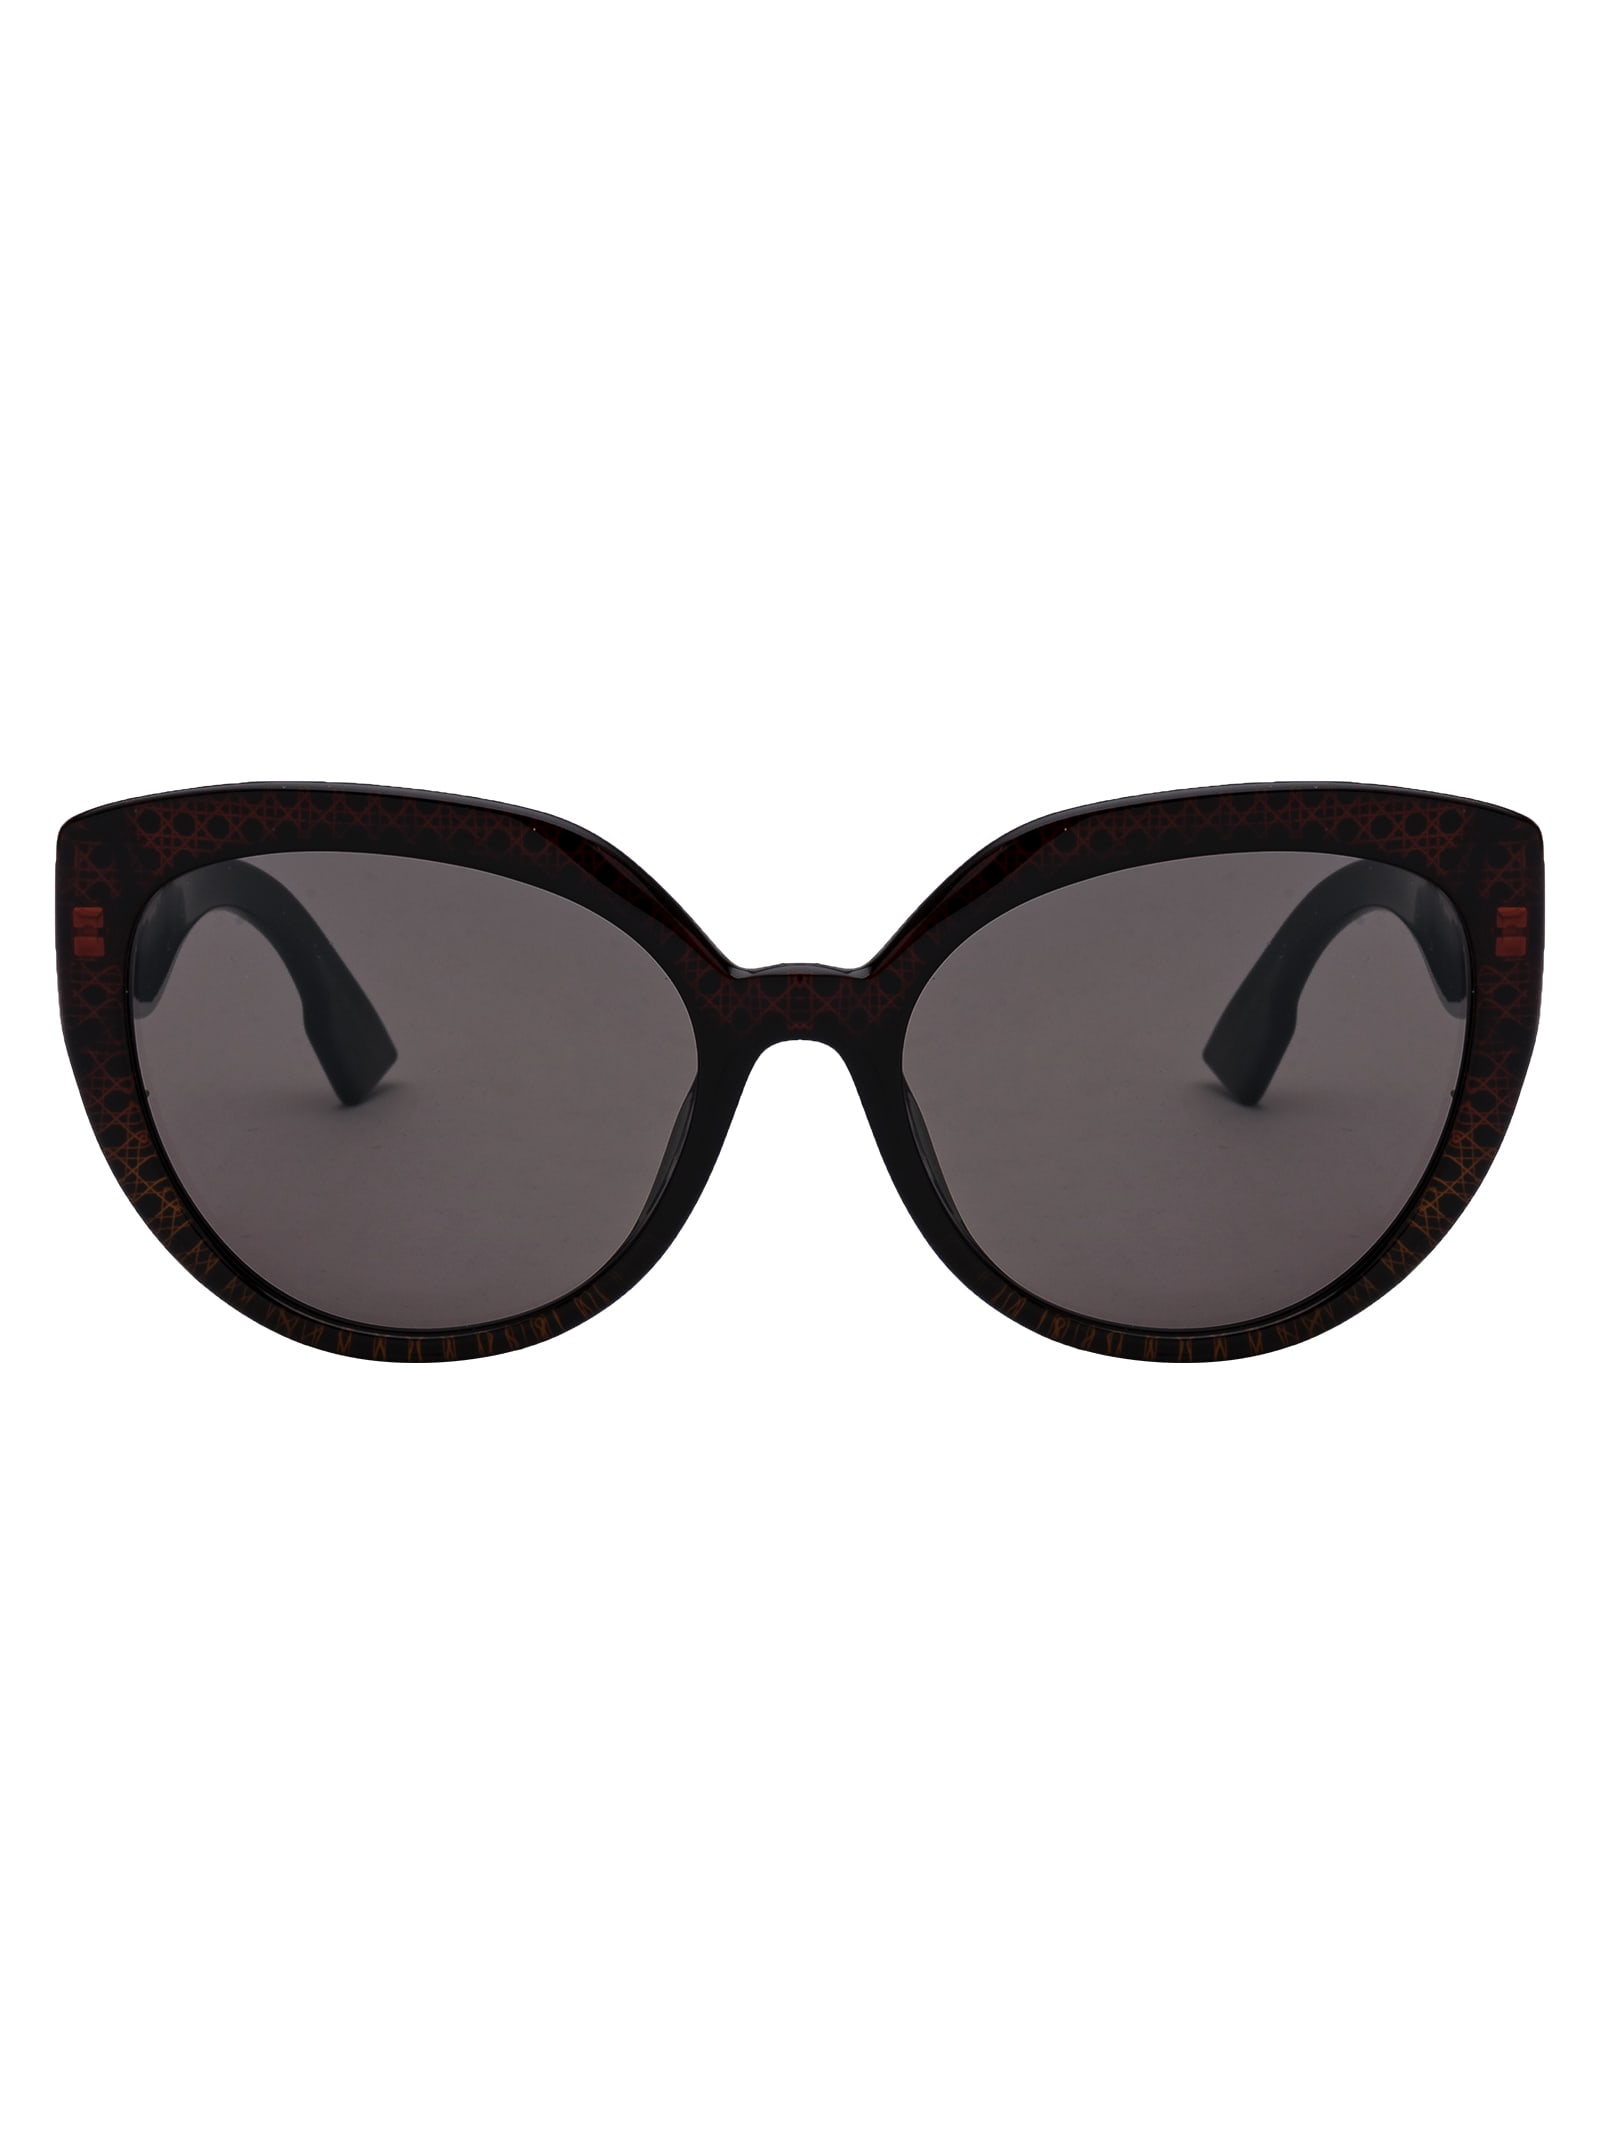 Ombraz Classics Polarized Prescription Sunglasses | Lens and Frame Co. -  Lens & Frame Co.